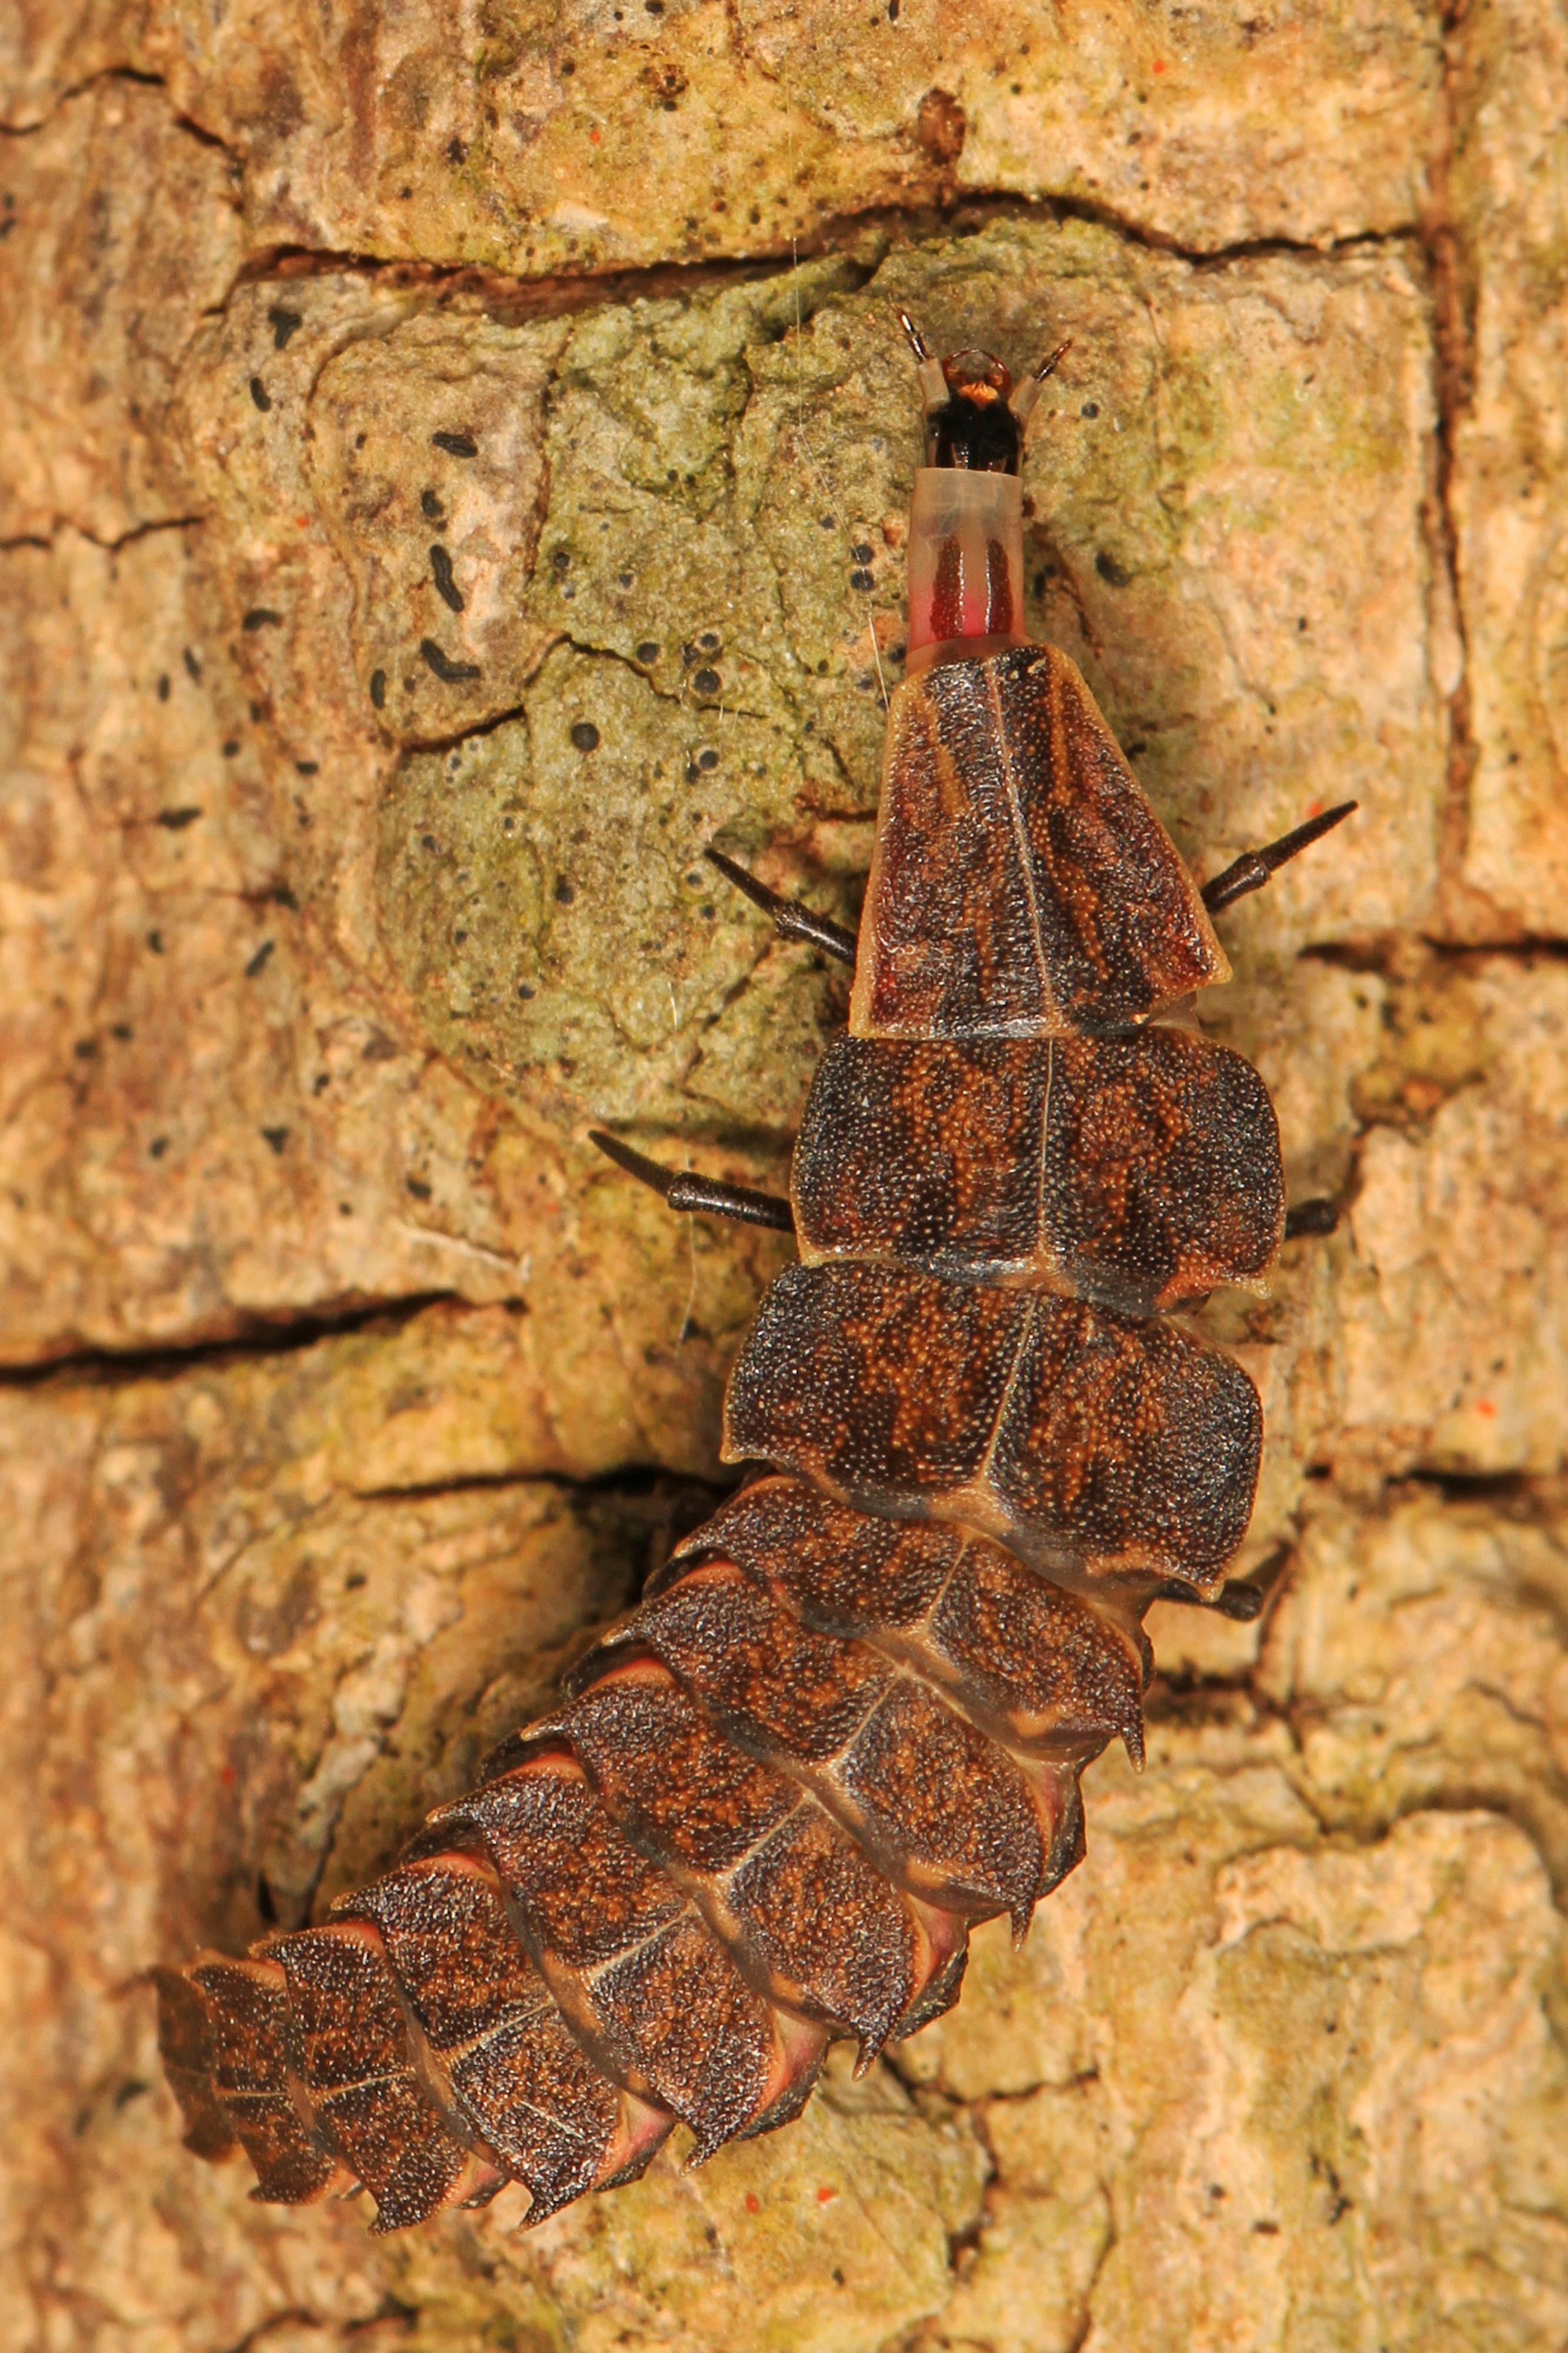 Firefly larva (species unknown), Leesylvania State Park, Woodbridge, Virginia